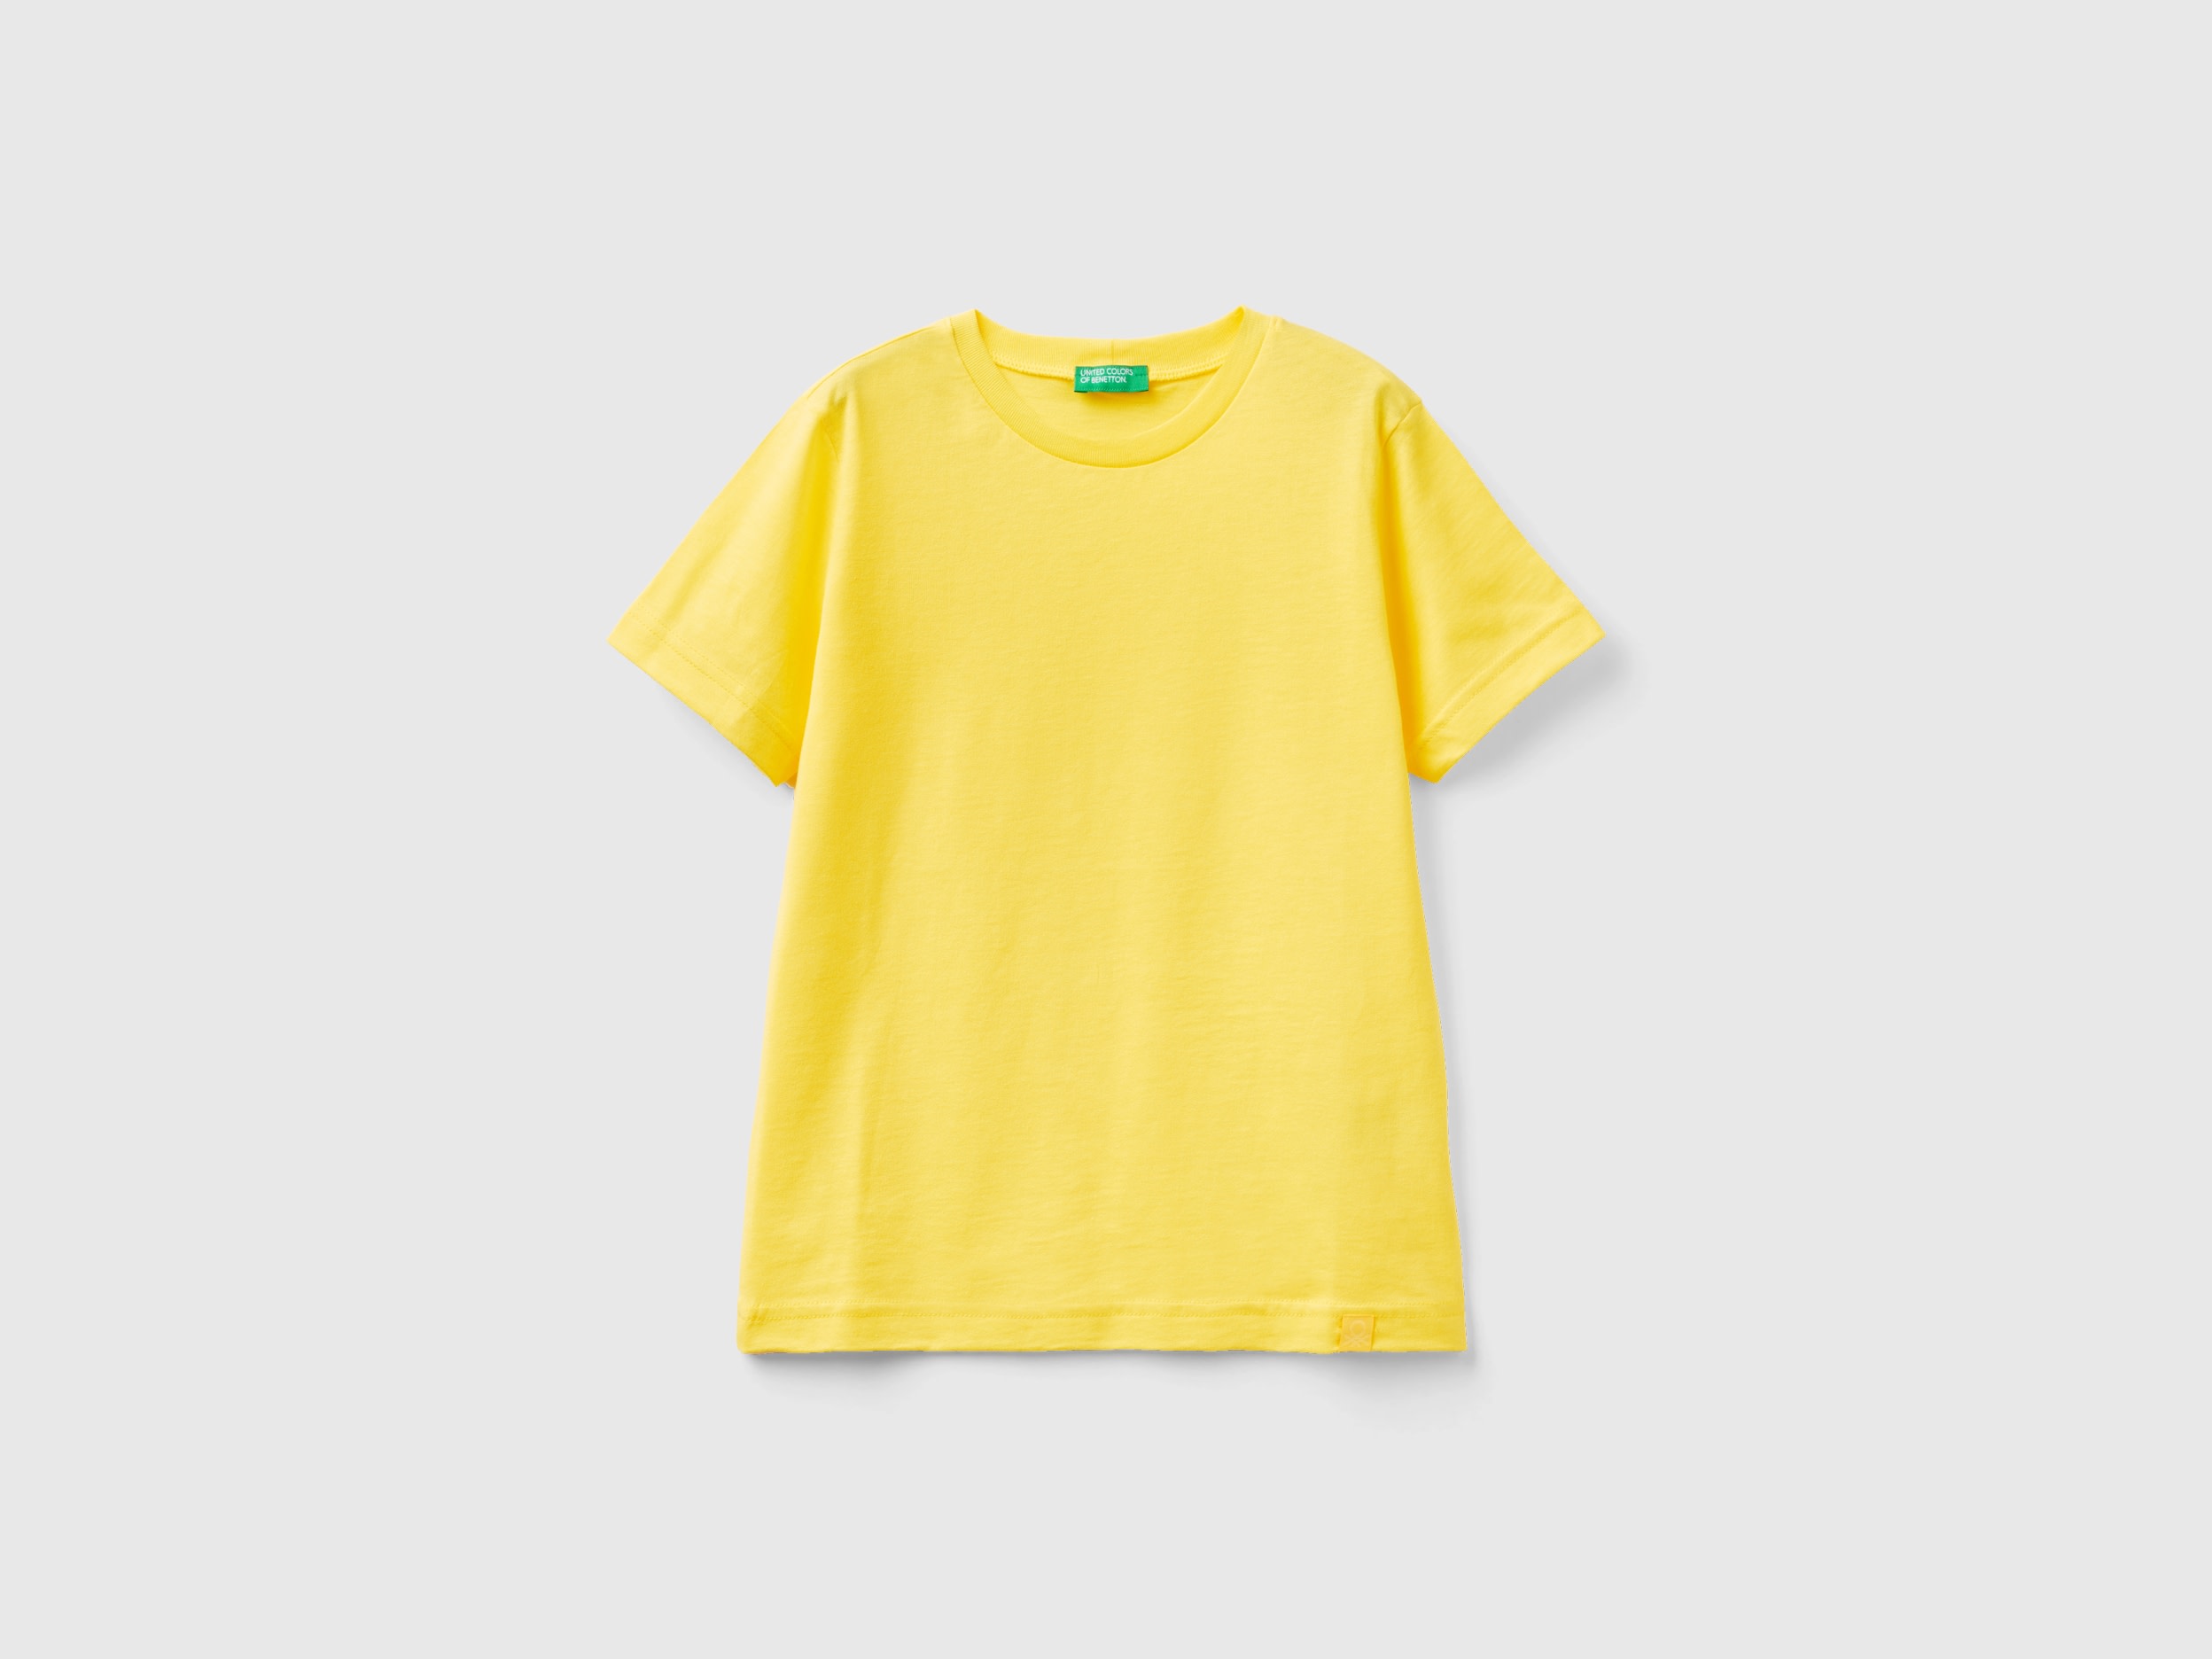 Benetton, Organic Cotton T-shirt, size 3XL, Yellow, Kids